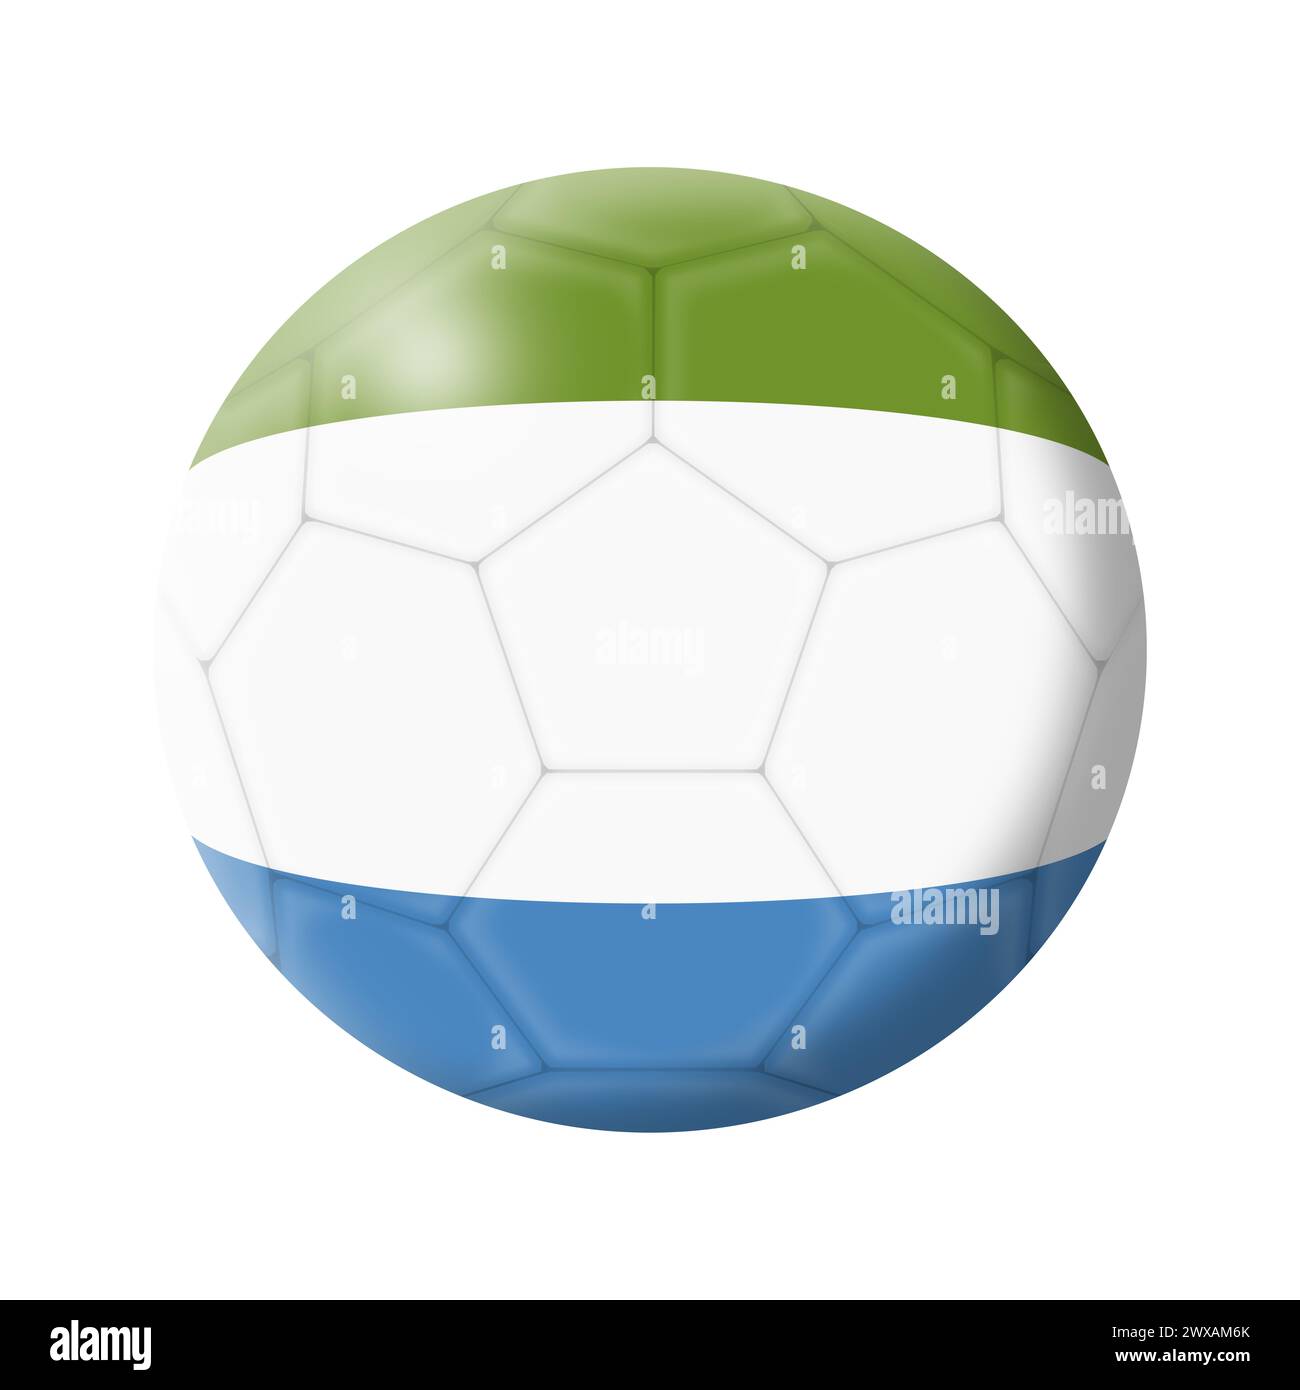 Sierra Leone soccer ball football Stock Photo